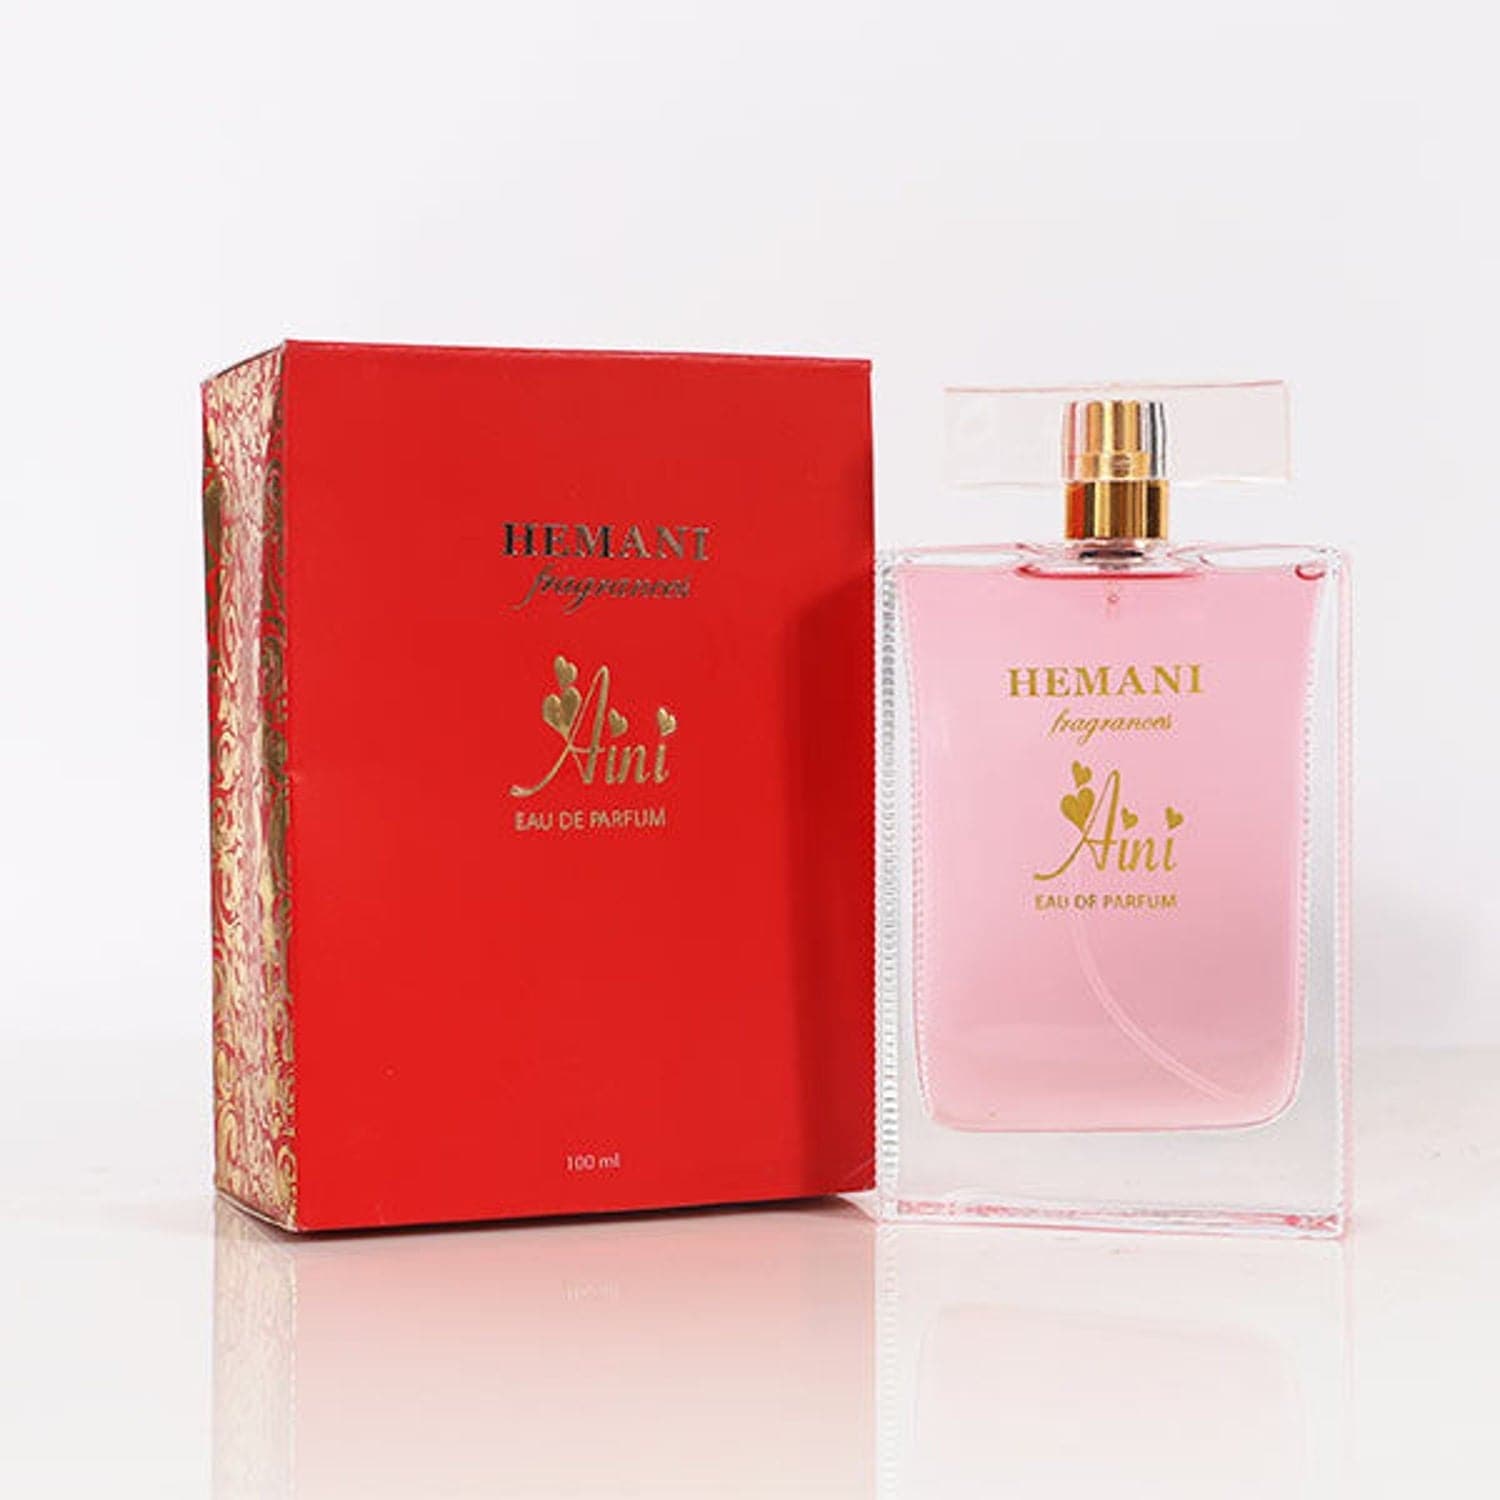 Hemani Aini Perfume 100Ml - Premium  from Hemani - Just Rs 700.00! Shop now at Cozmetica